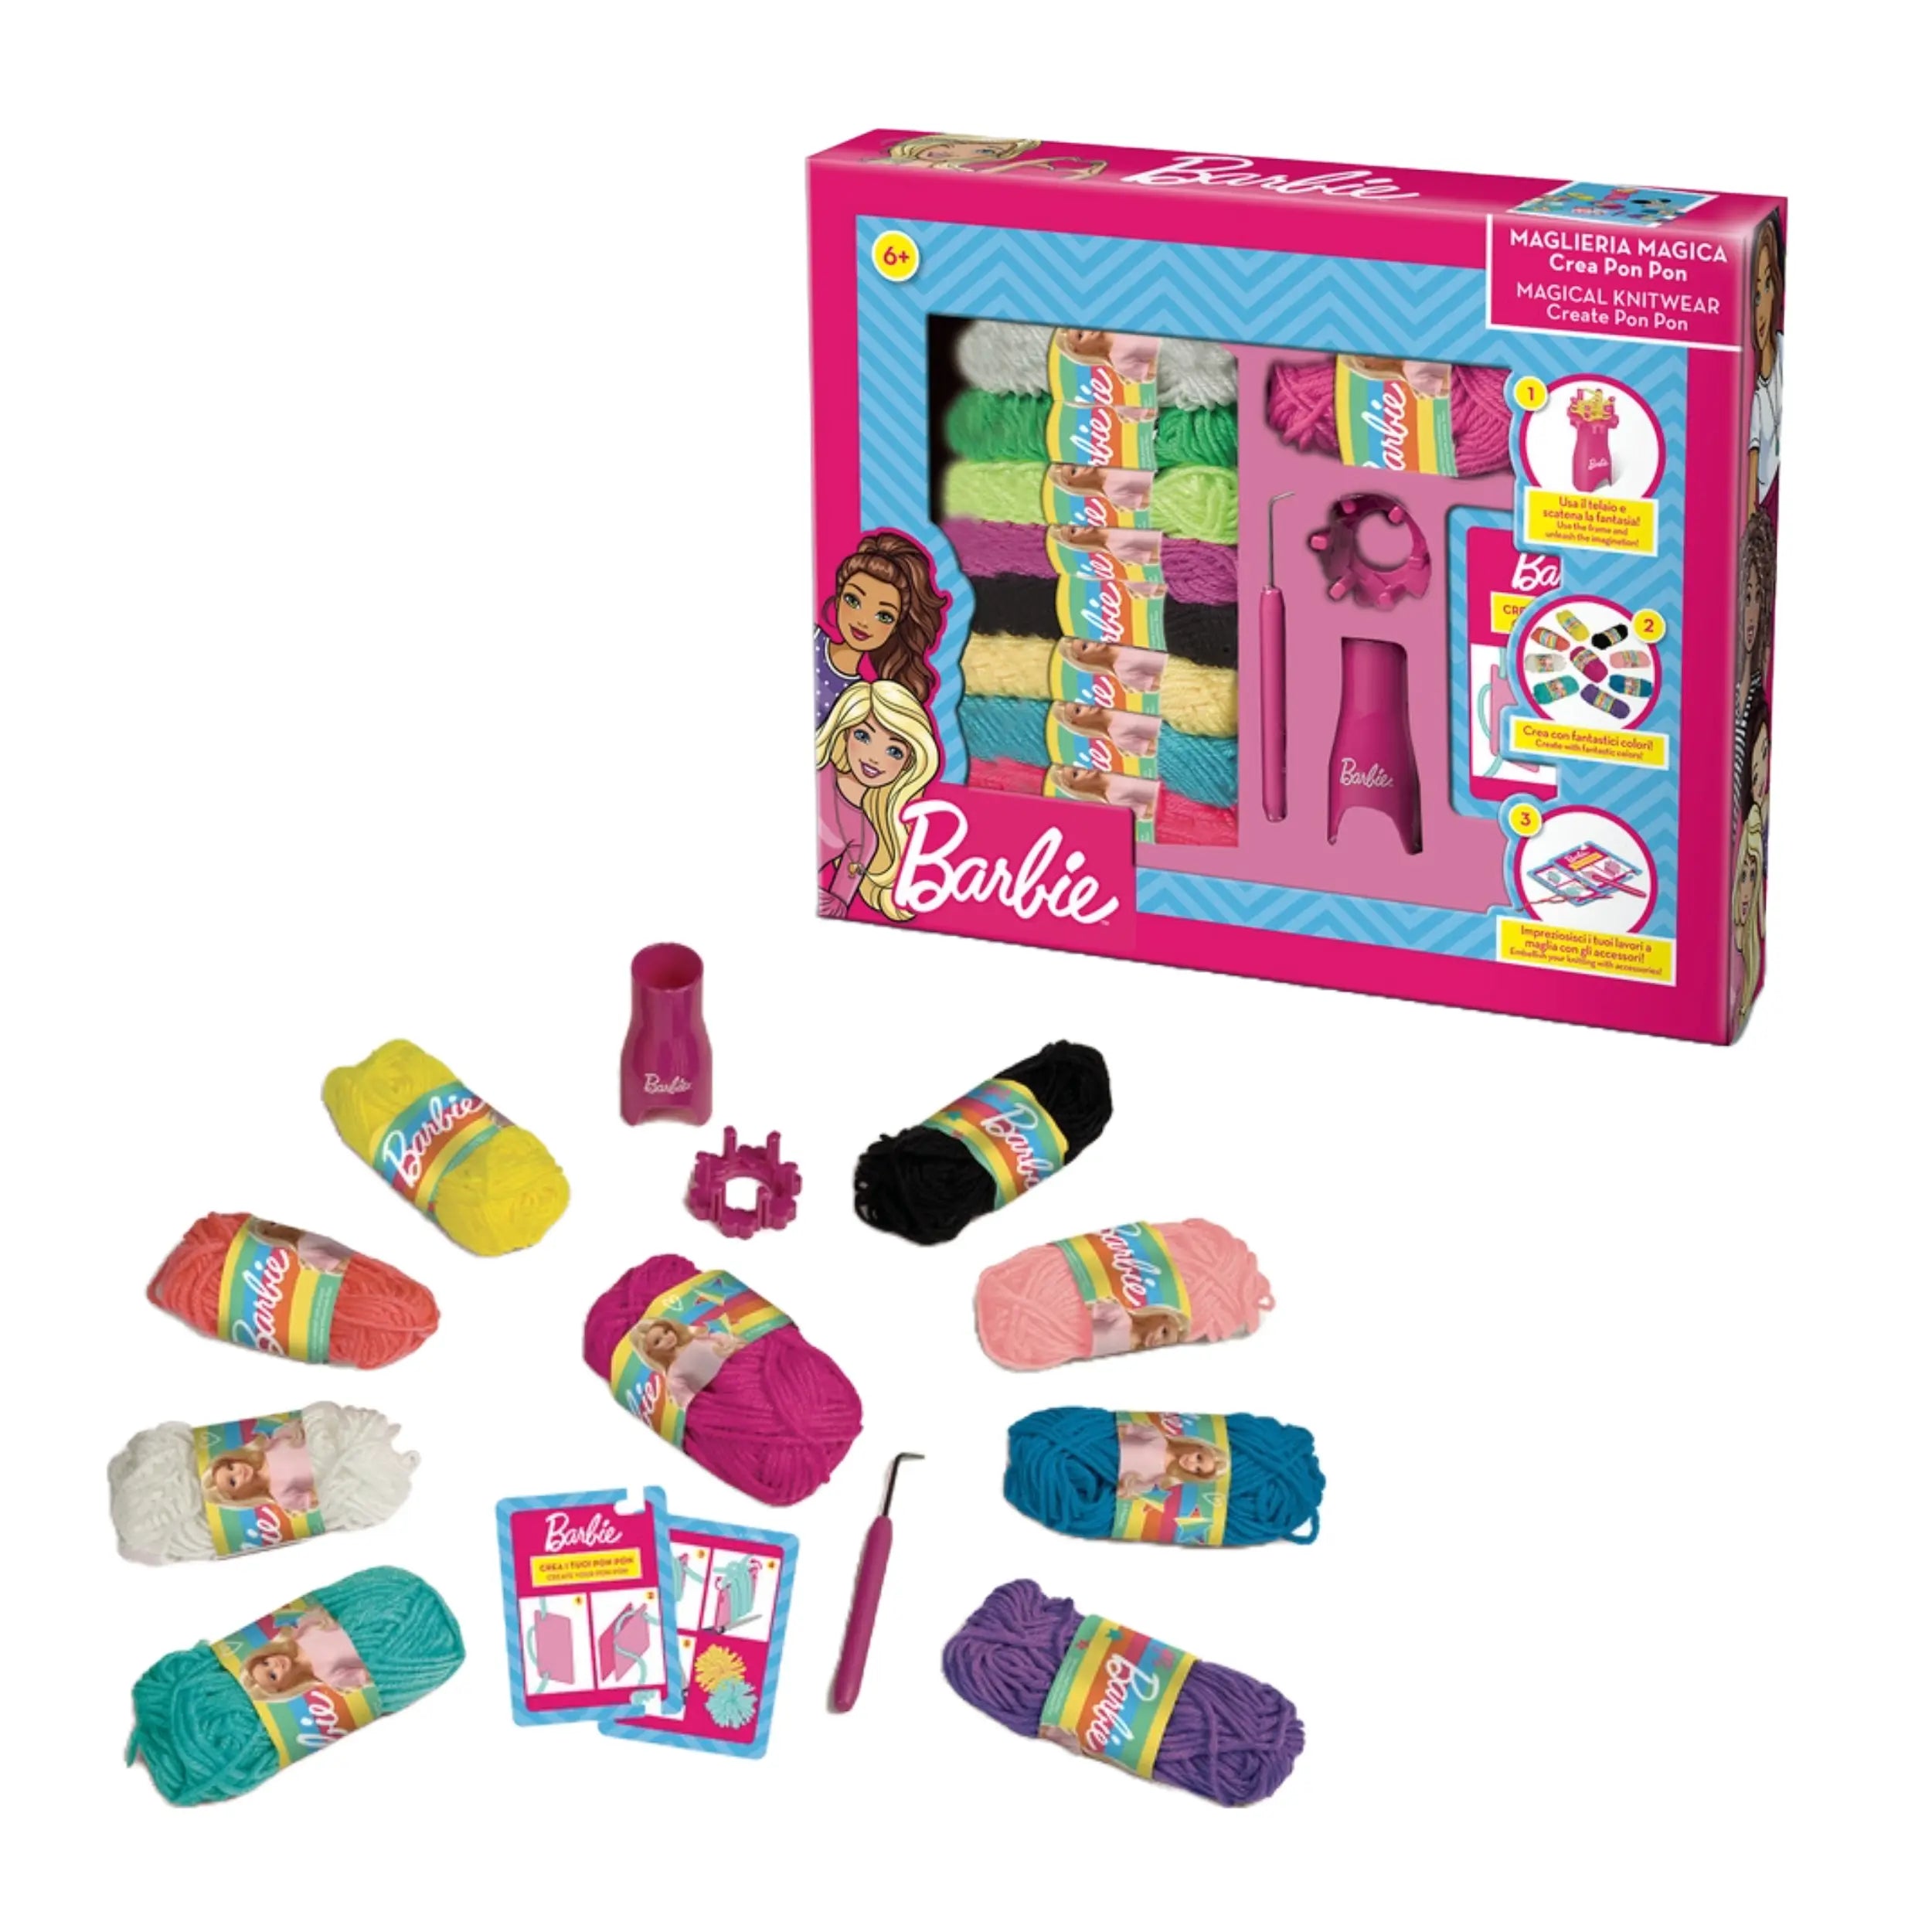 Grandi Giochi - Barbie Knitwear Magic Create Pom Poms